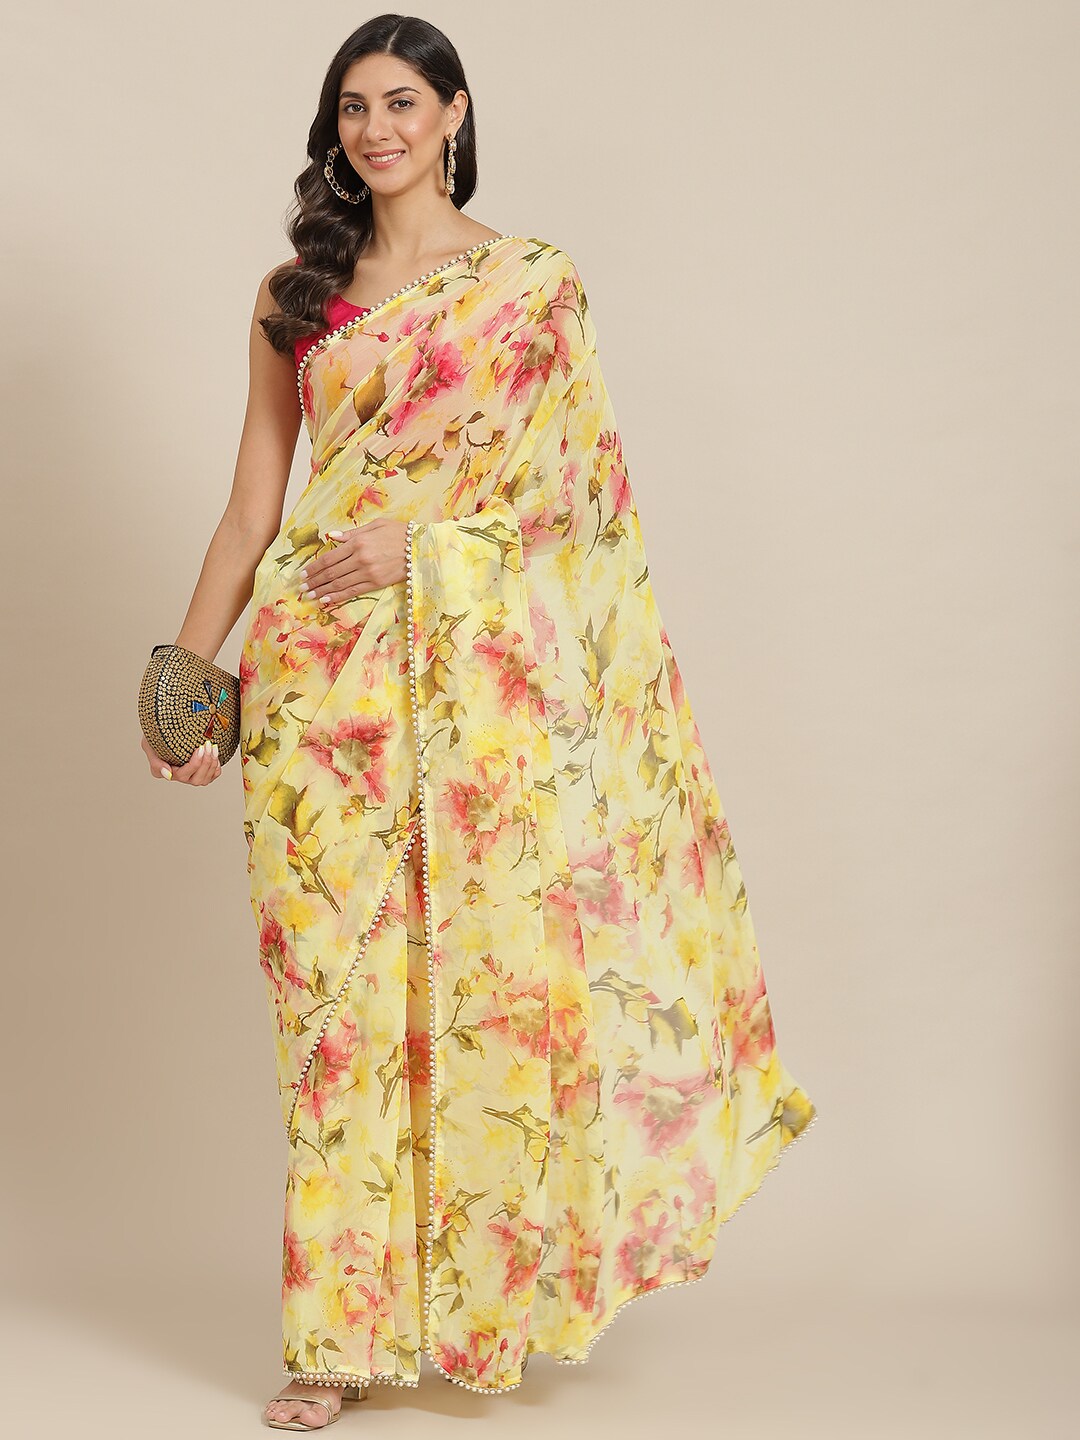 Tikhi Imli Yellow & Pink Floral Beads and Stones Saree Price in India